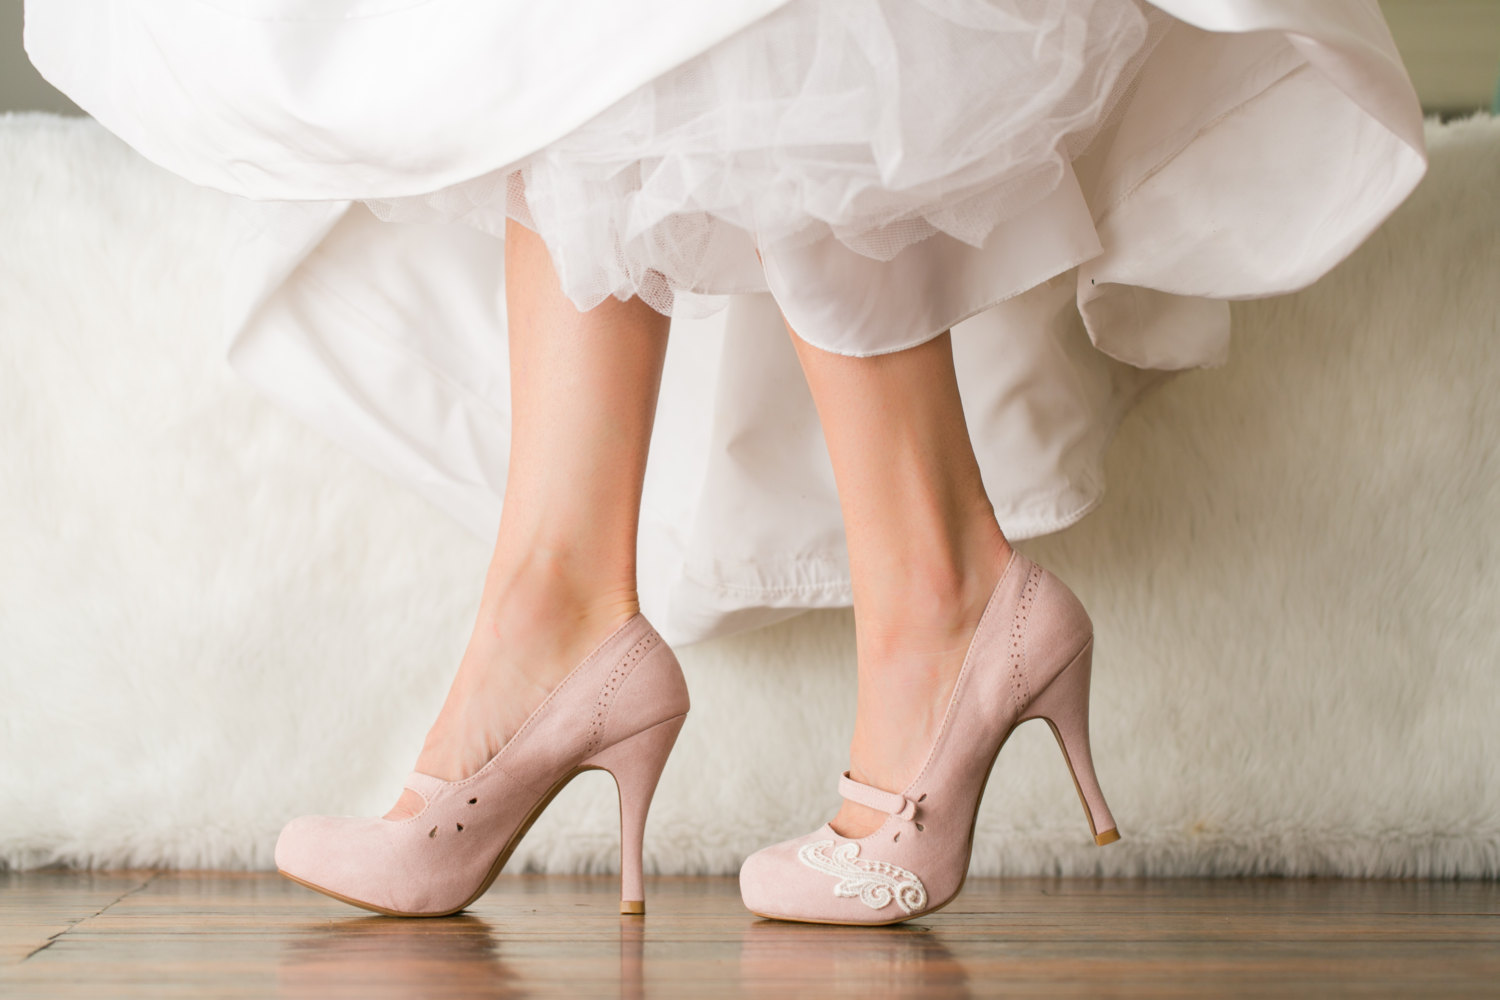 blush platforms wedding shoes for bride | via http://emmalinebride.com/bride/wedding-shoes-for-bride/